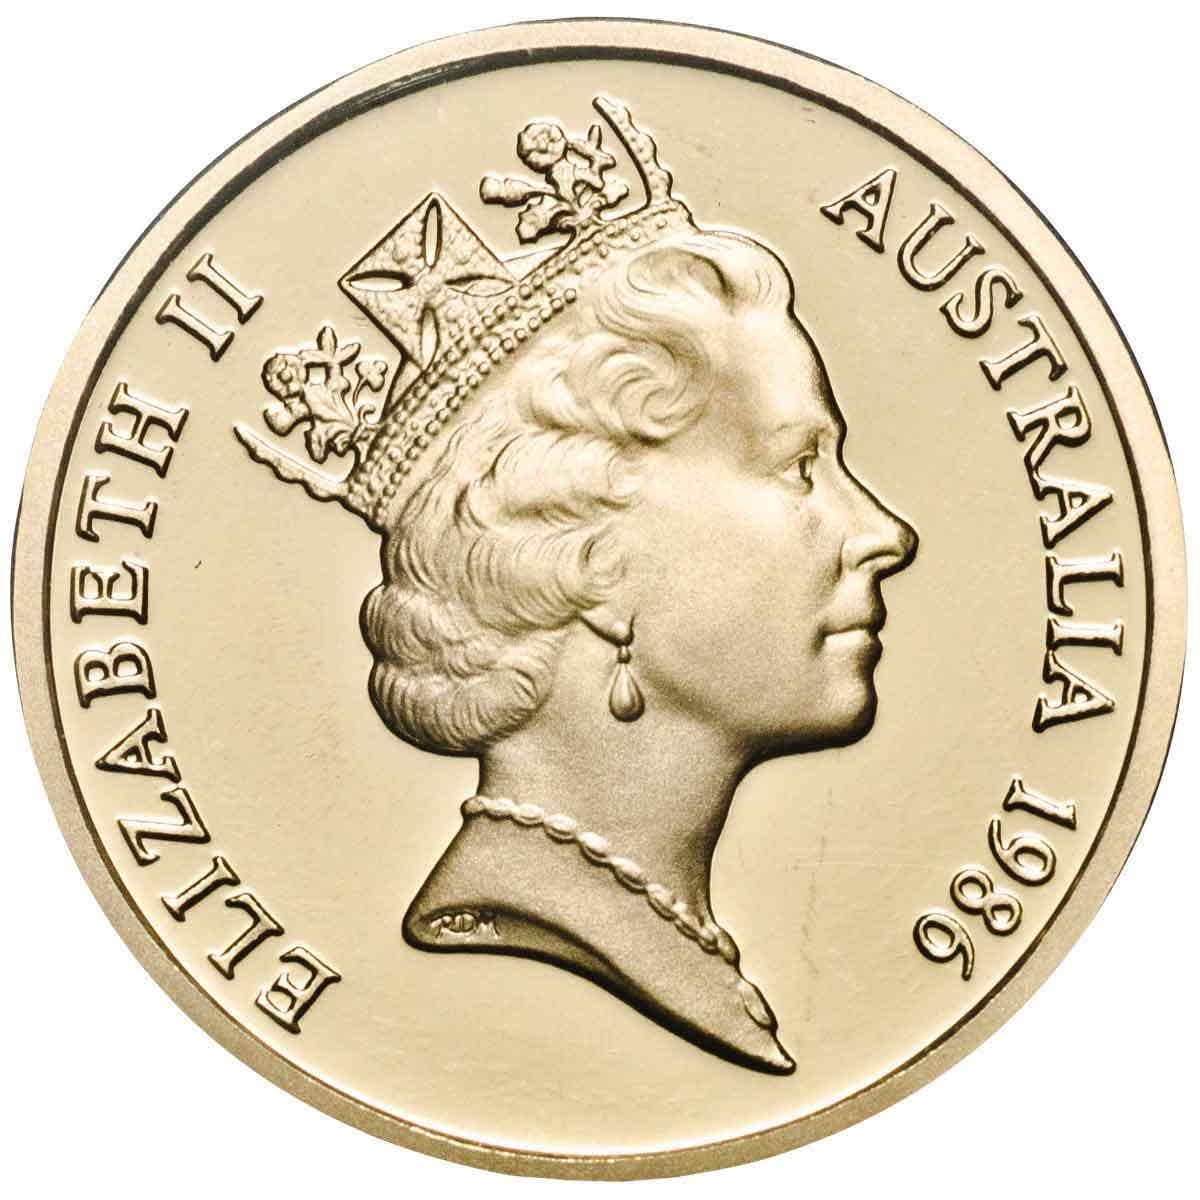 Australia International Year of Peace 1986 7-Coin Proof Set